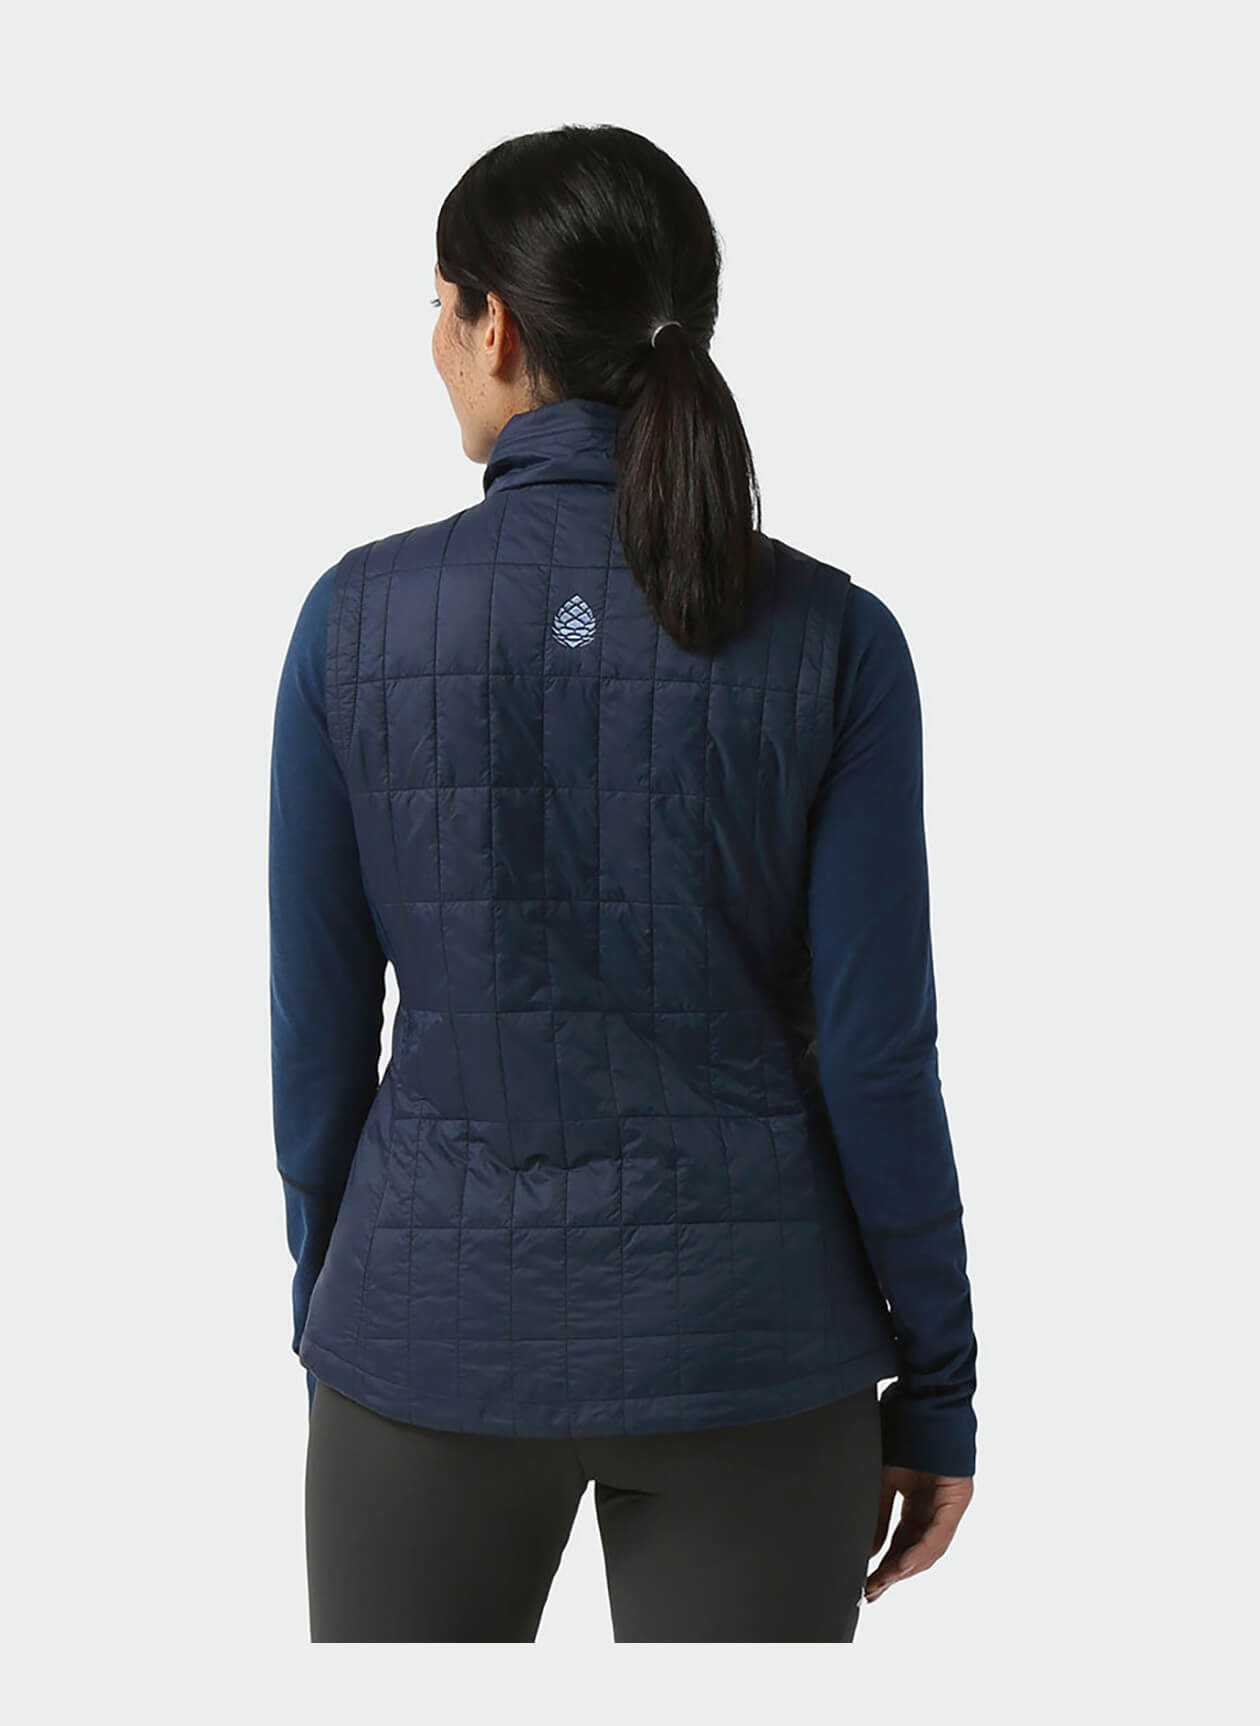 STIO Women's Azura Lightweight Vest, Mountain Shadow